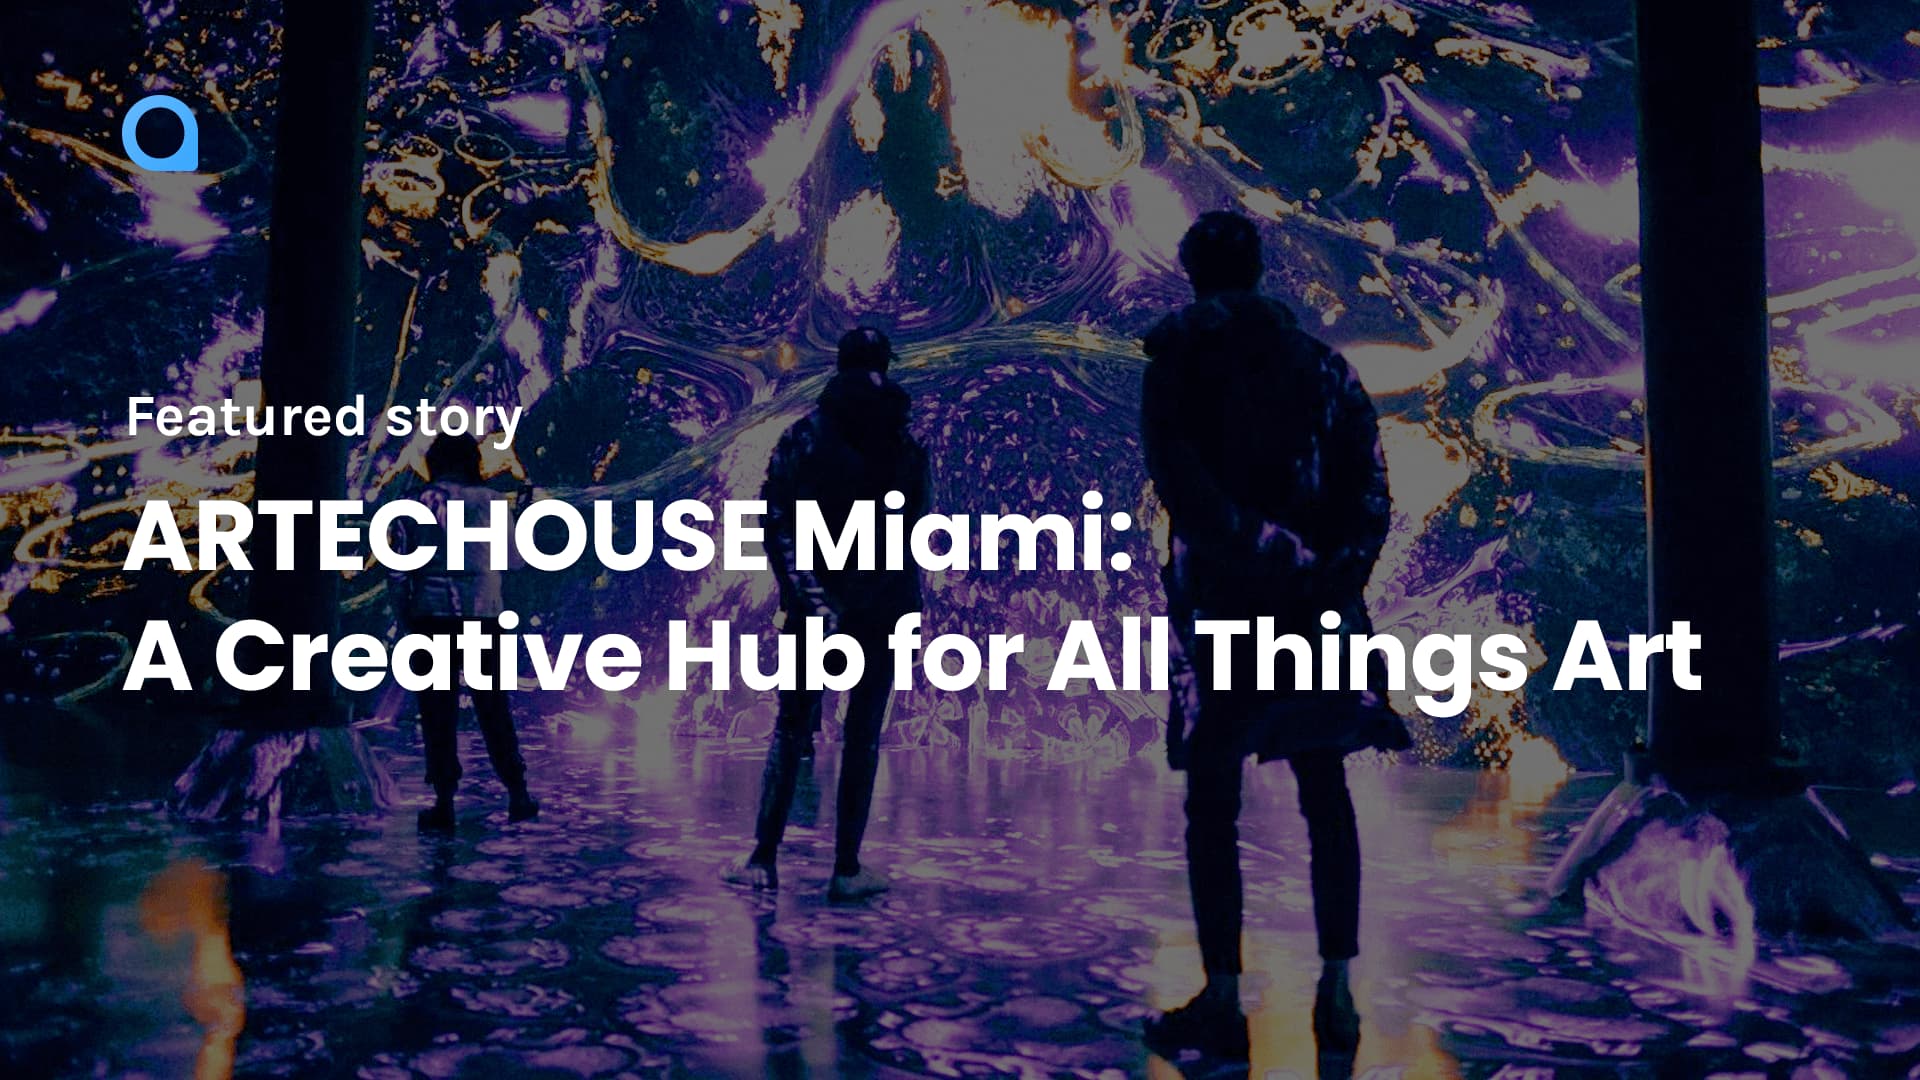 ARTECHOUSE Miami: A Creative Hub for All Things Art